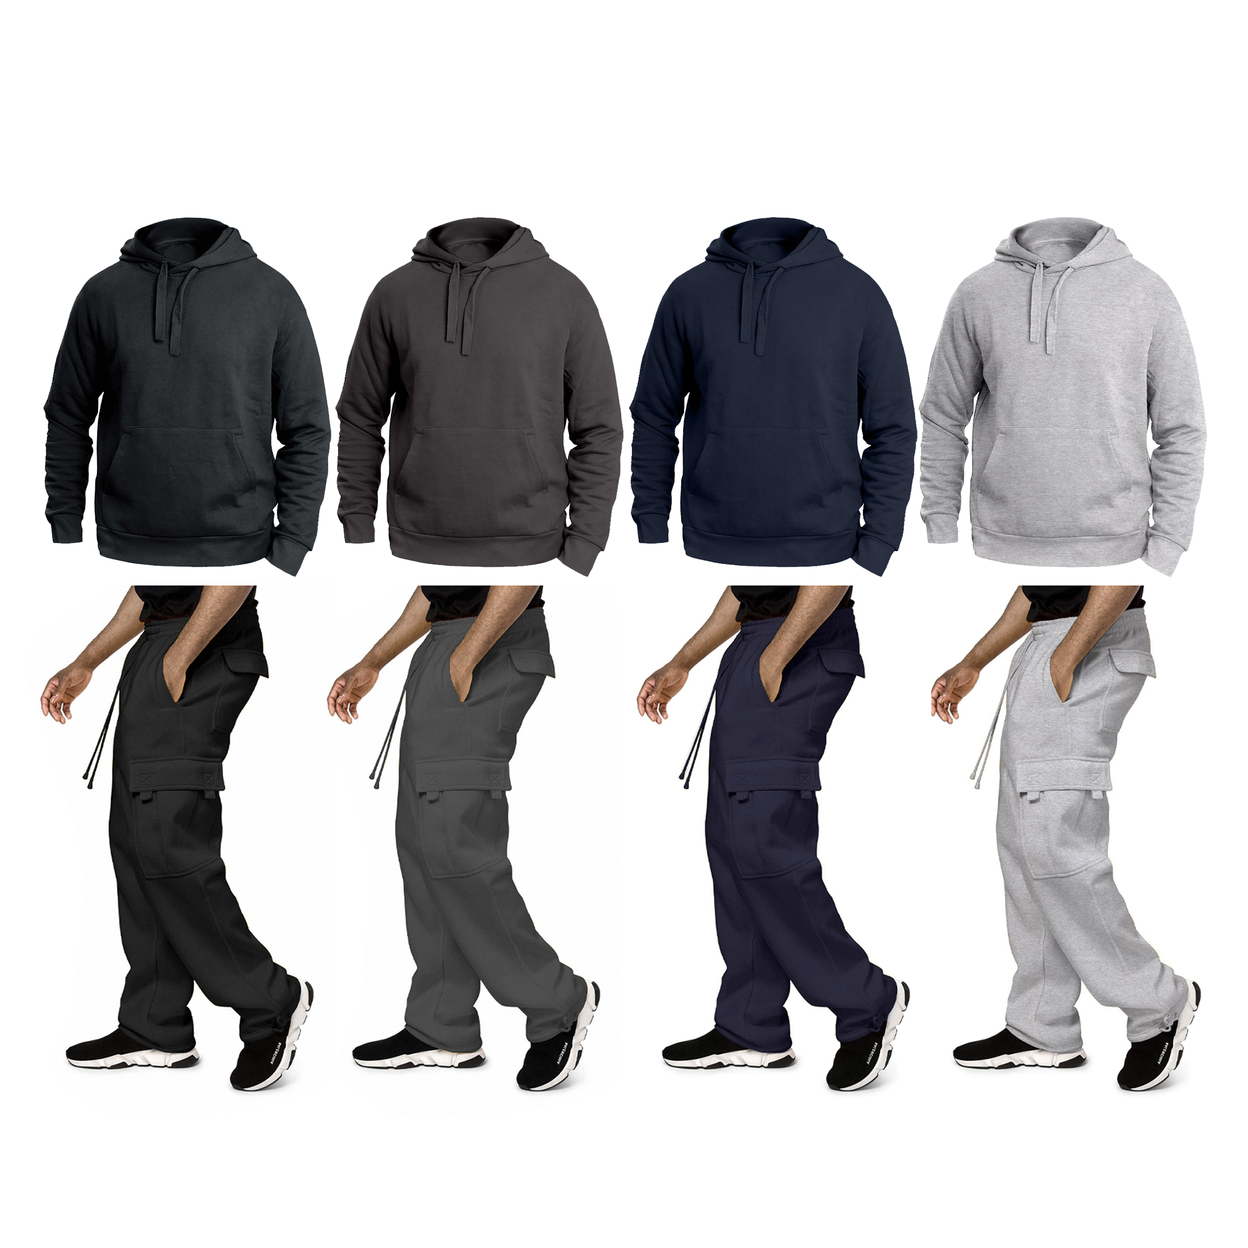 Men's Big & Tall Winter Warm Cozy Athletic Fleece Lined Multi-Pocket Cargo Sweatsuit - Navy, 3xl